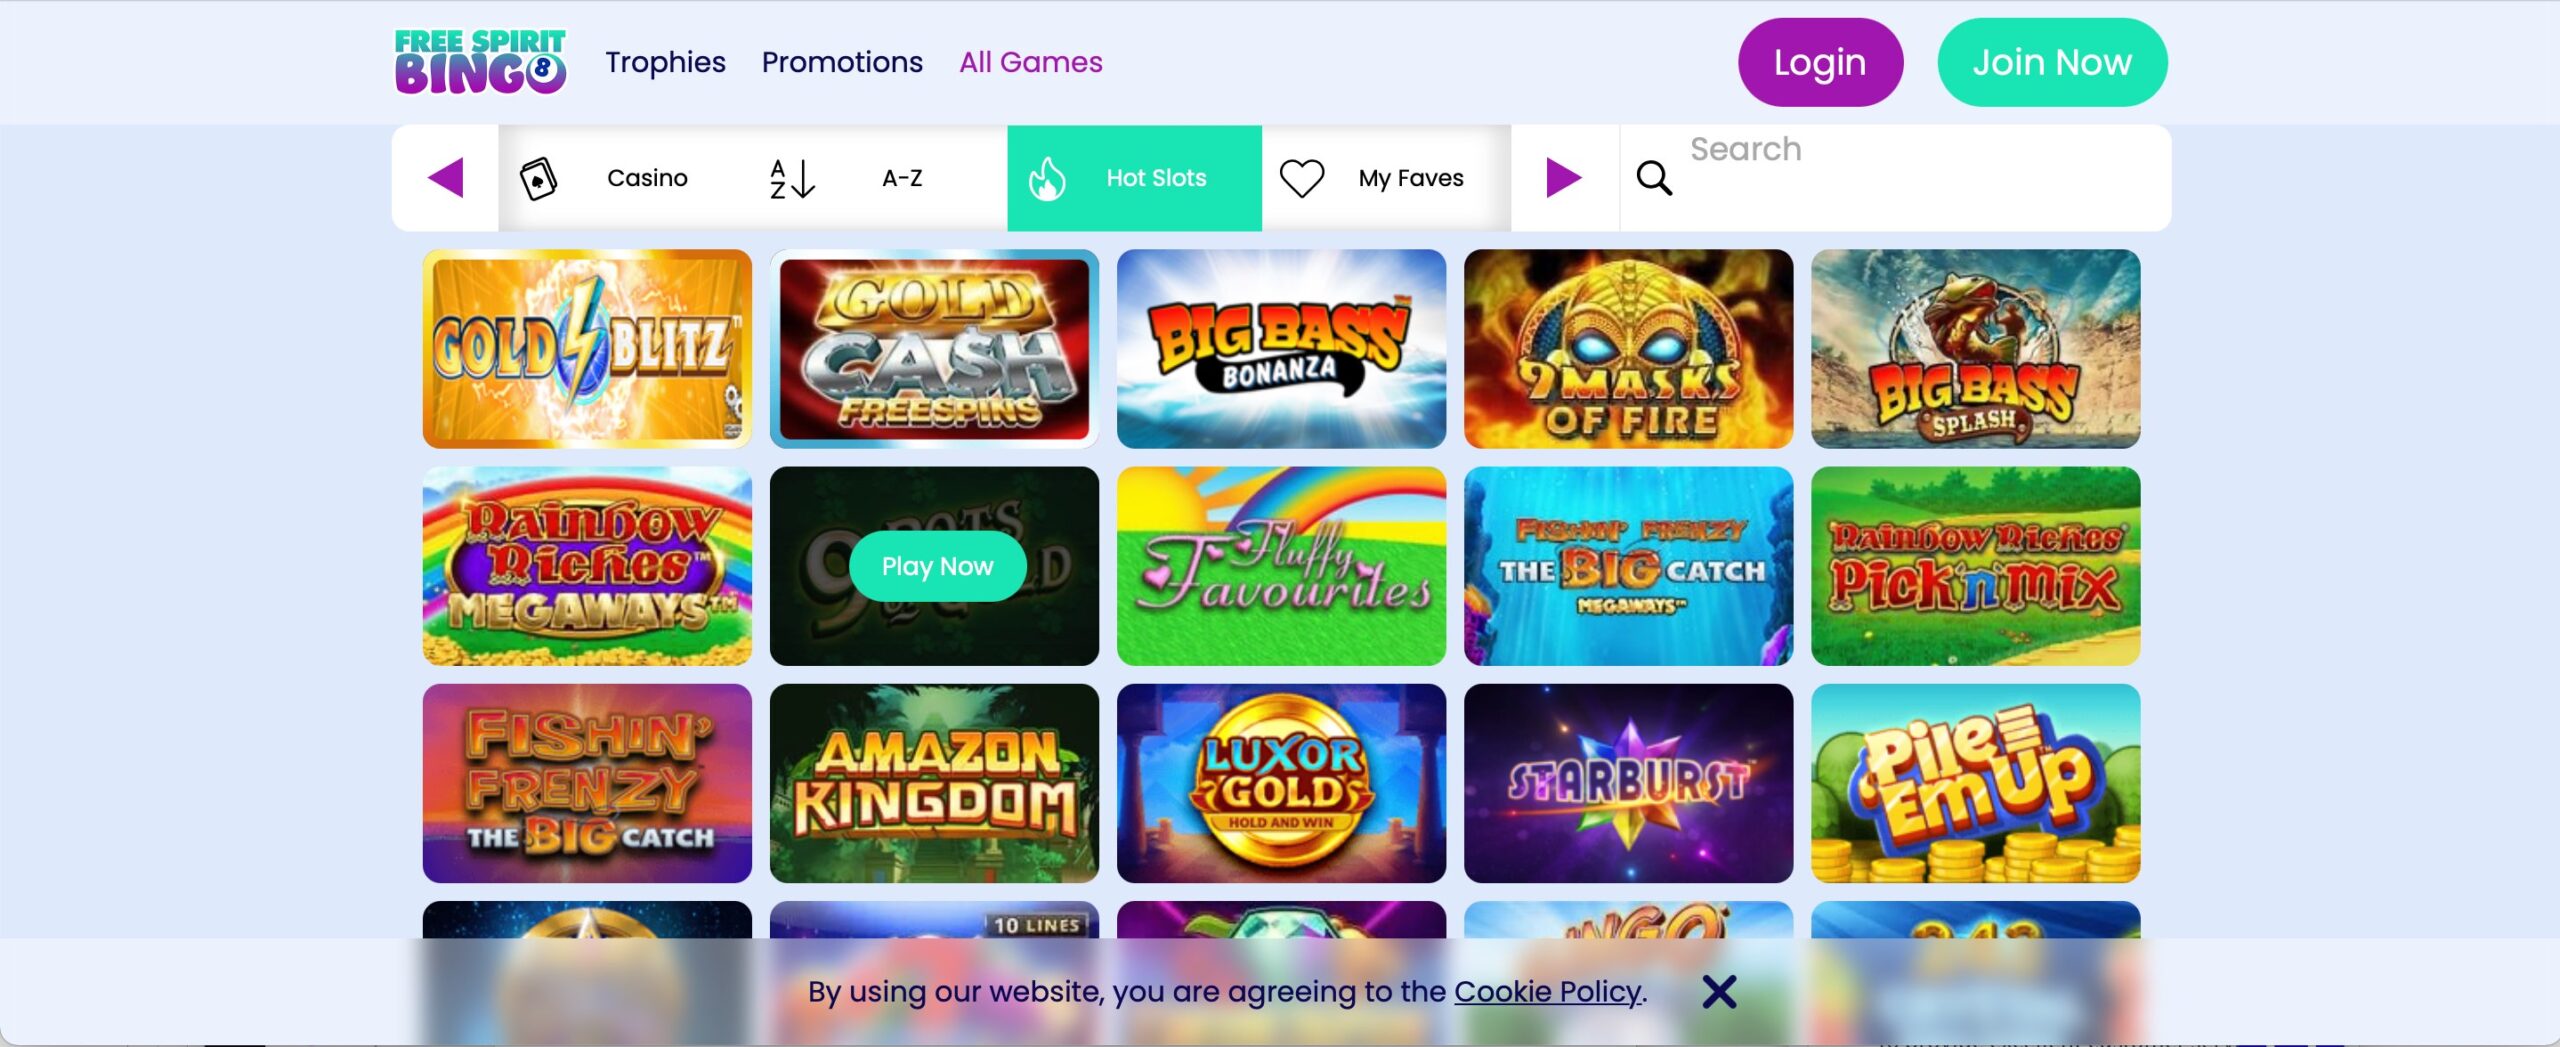 Free Spirit Bingo Casino Games